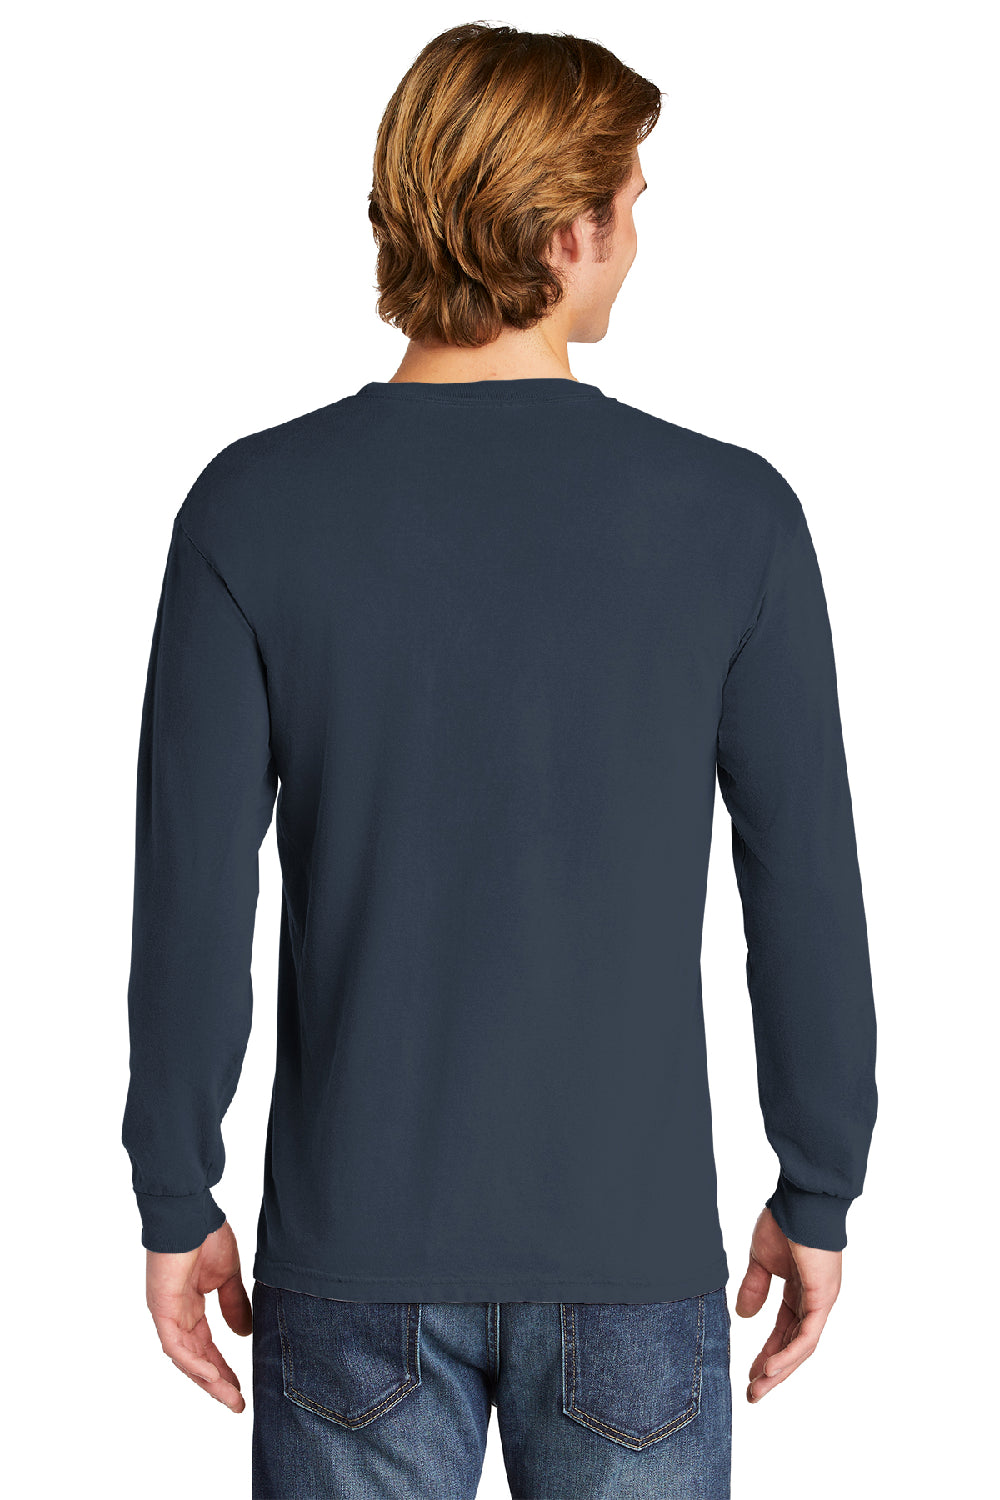 Comfort Colors 6014/C6014 Mens Long Sleeve Crewneck T-Shirt Midnight Navy Blue Back